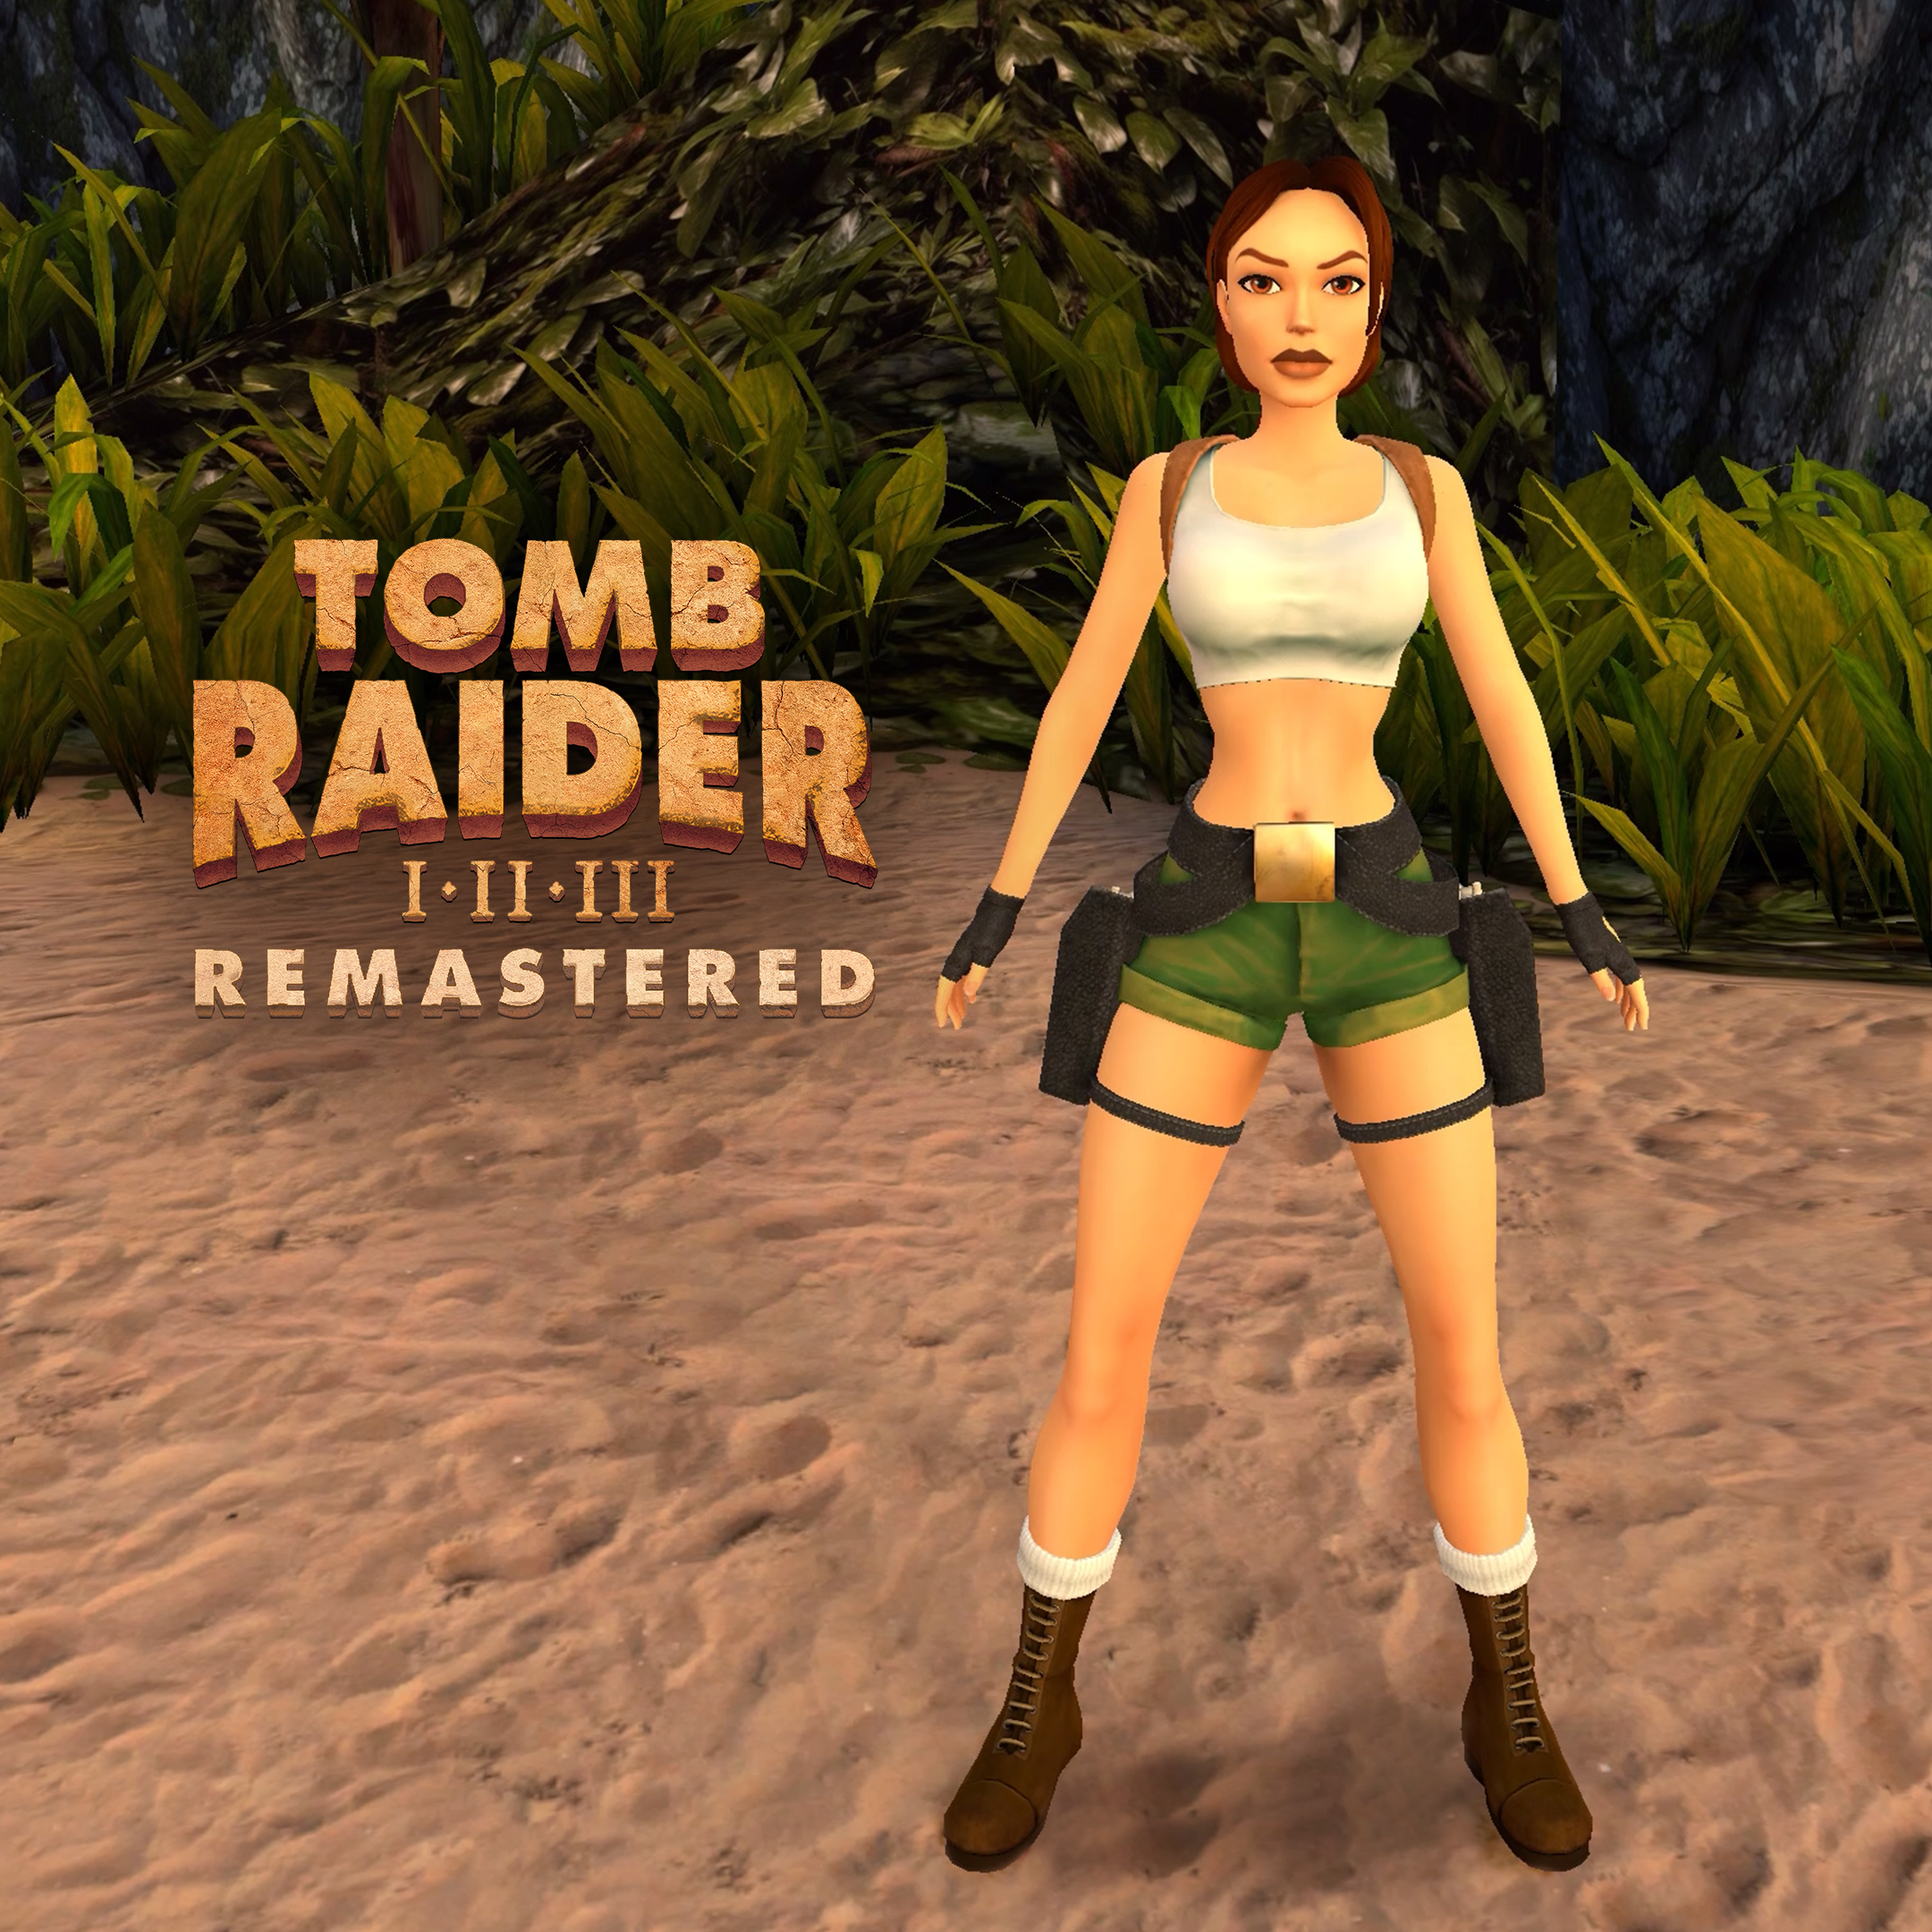 News about Tomb Raider I-II-III Remastered - Croft Generation